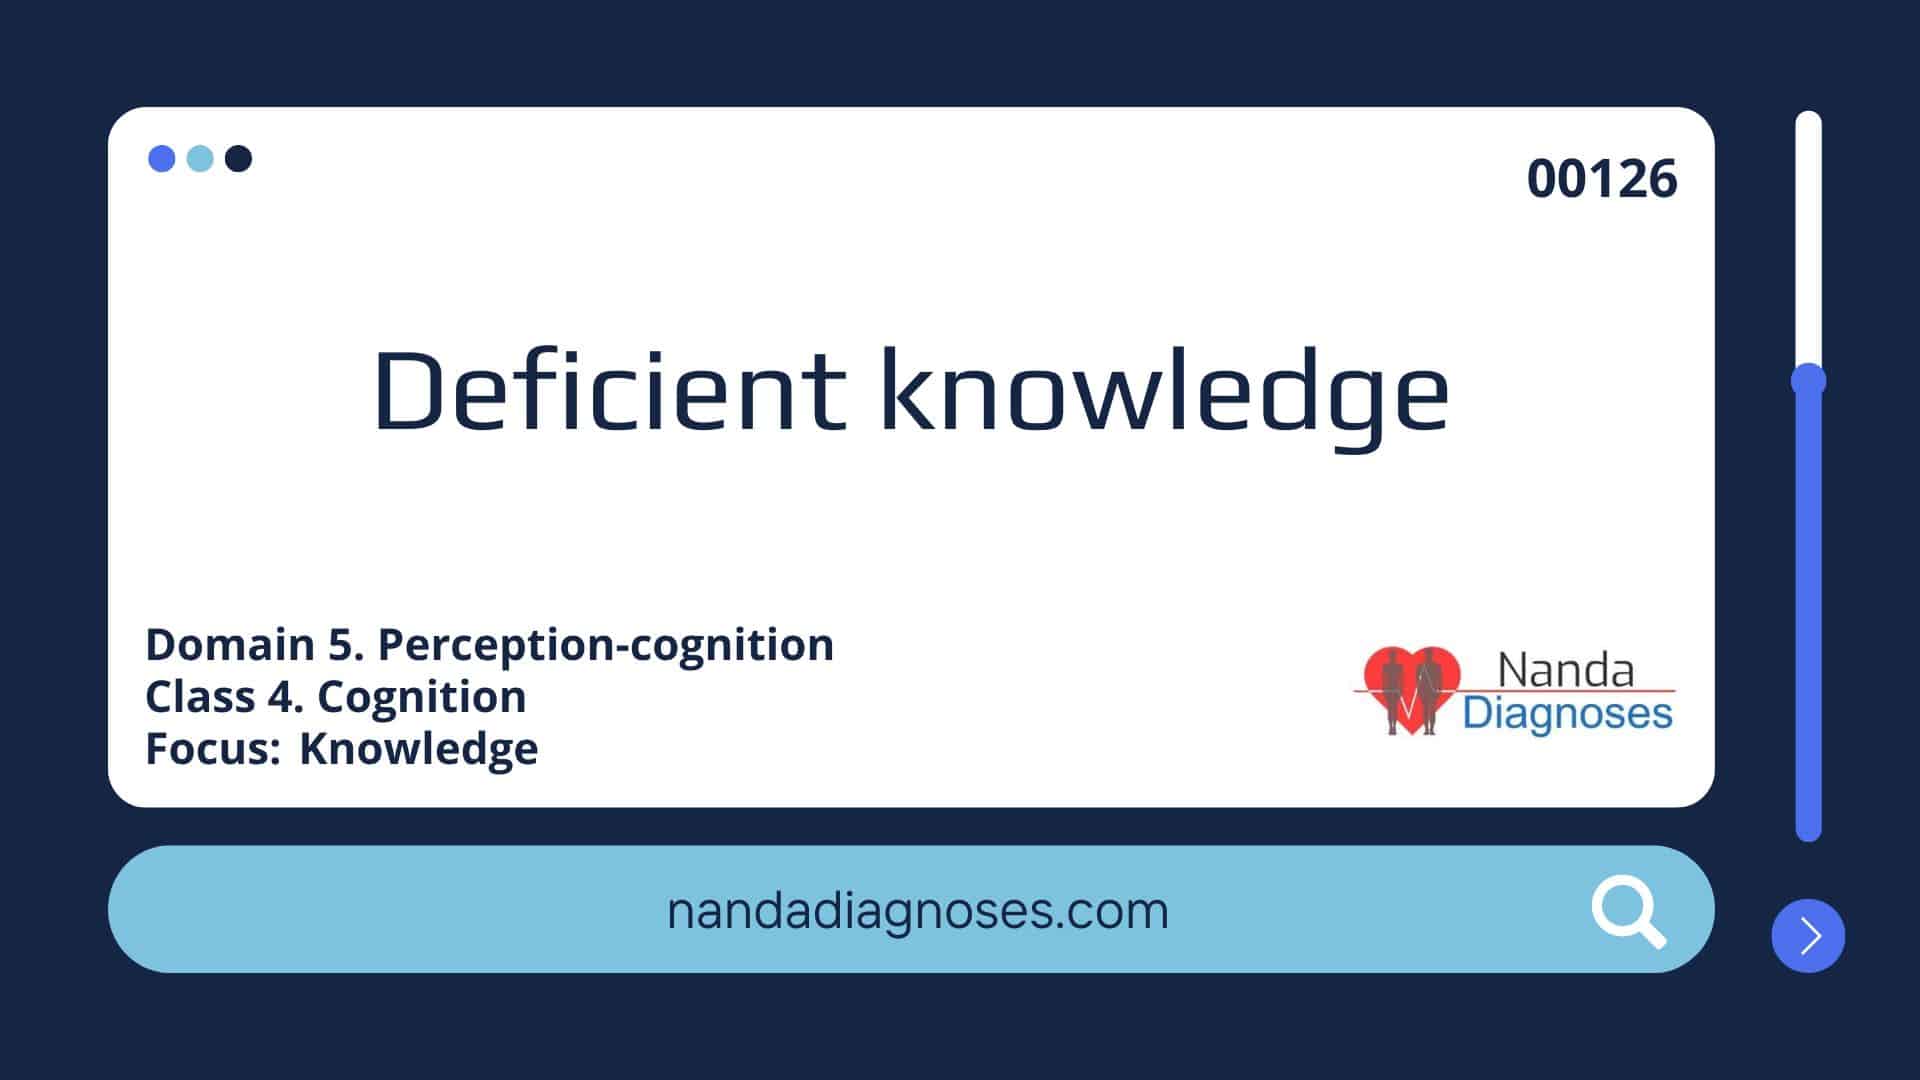 Nursing diagnosis Deficient knowledge